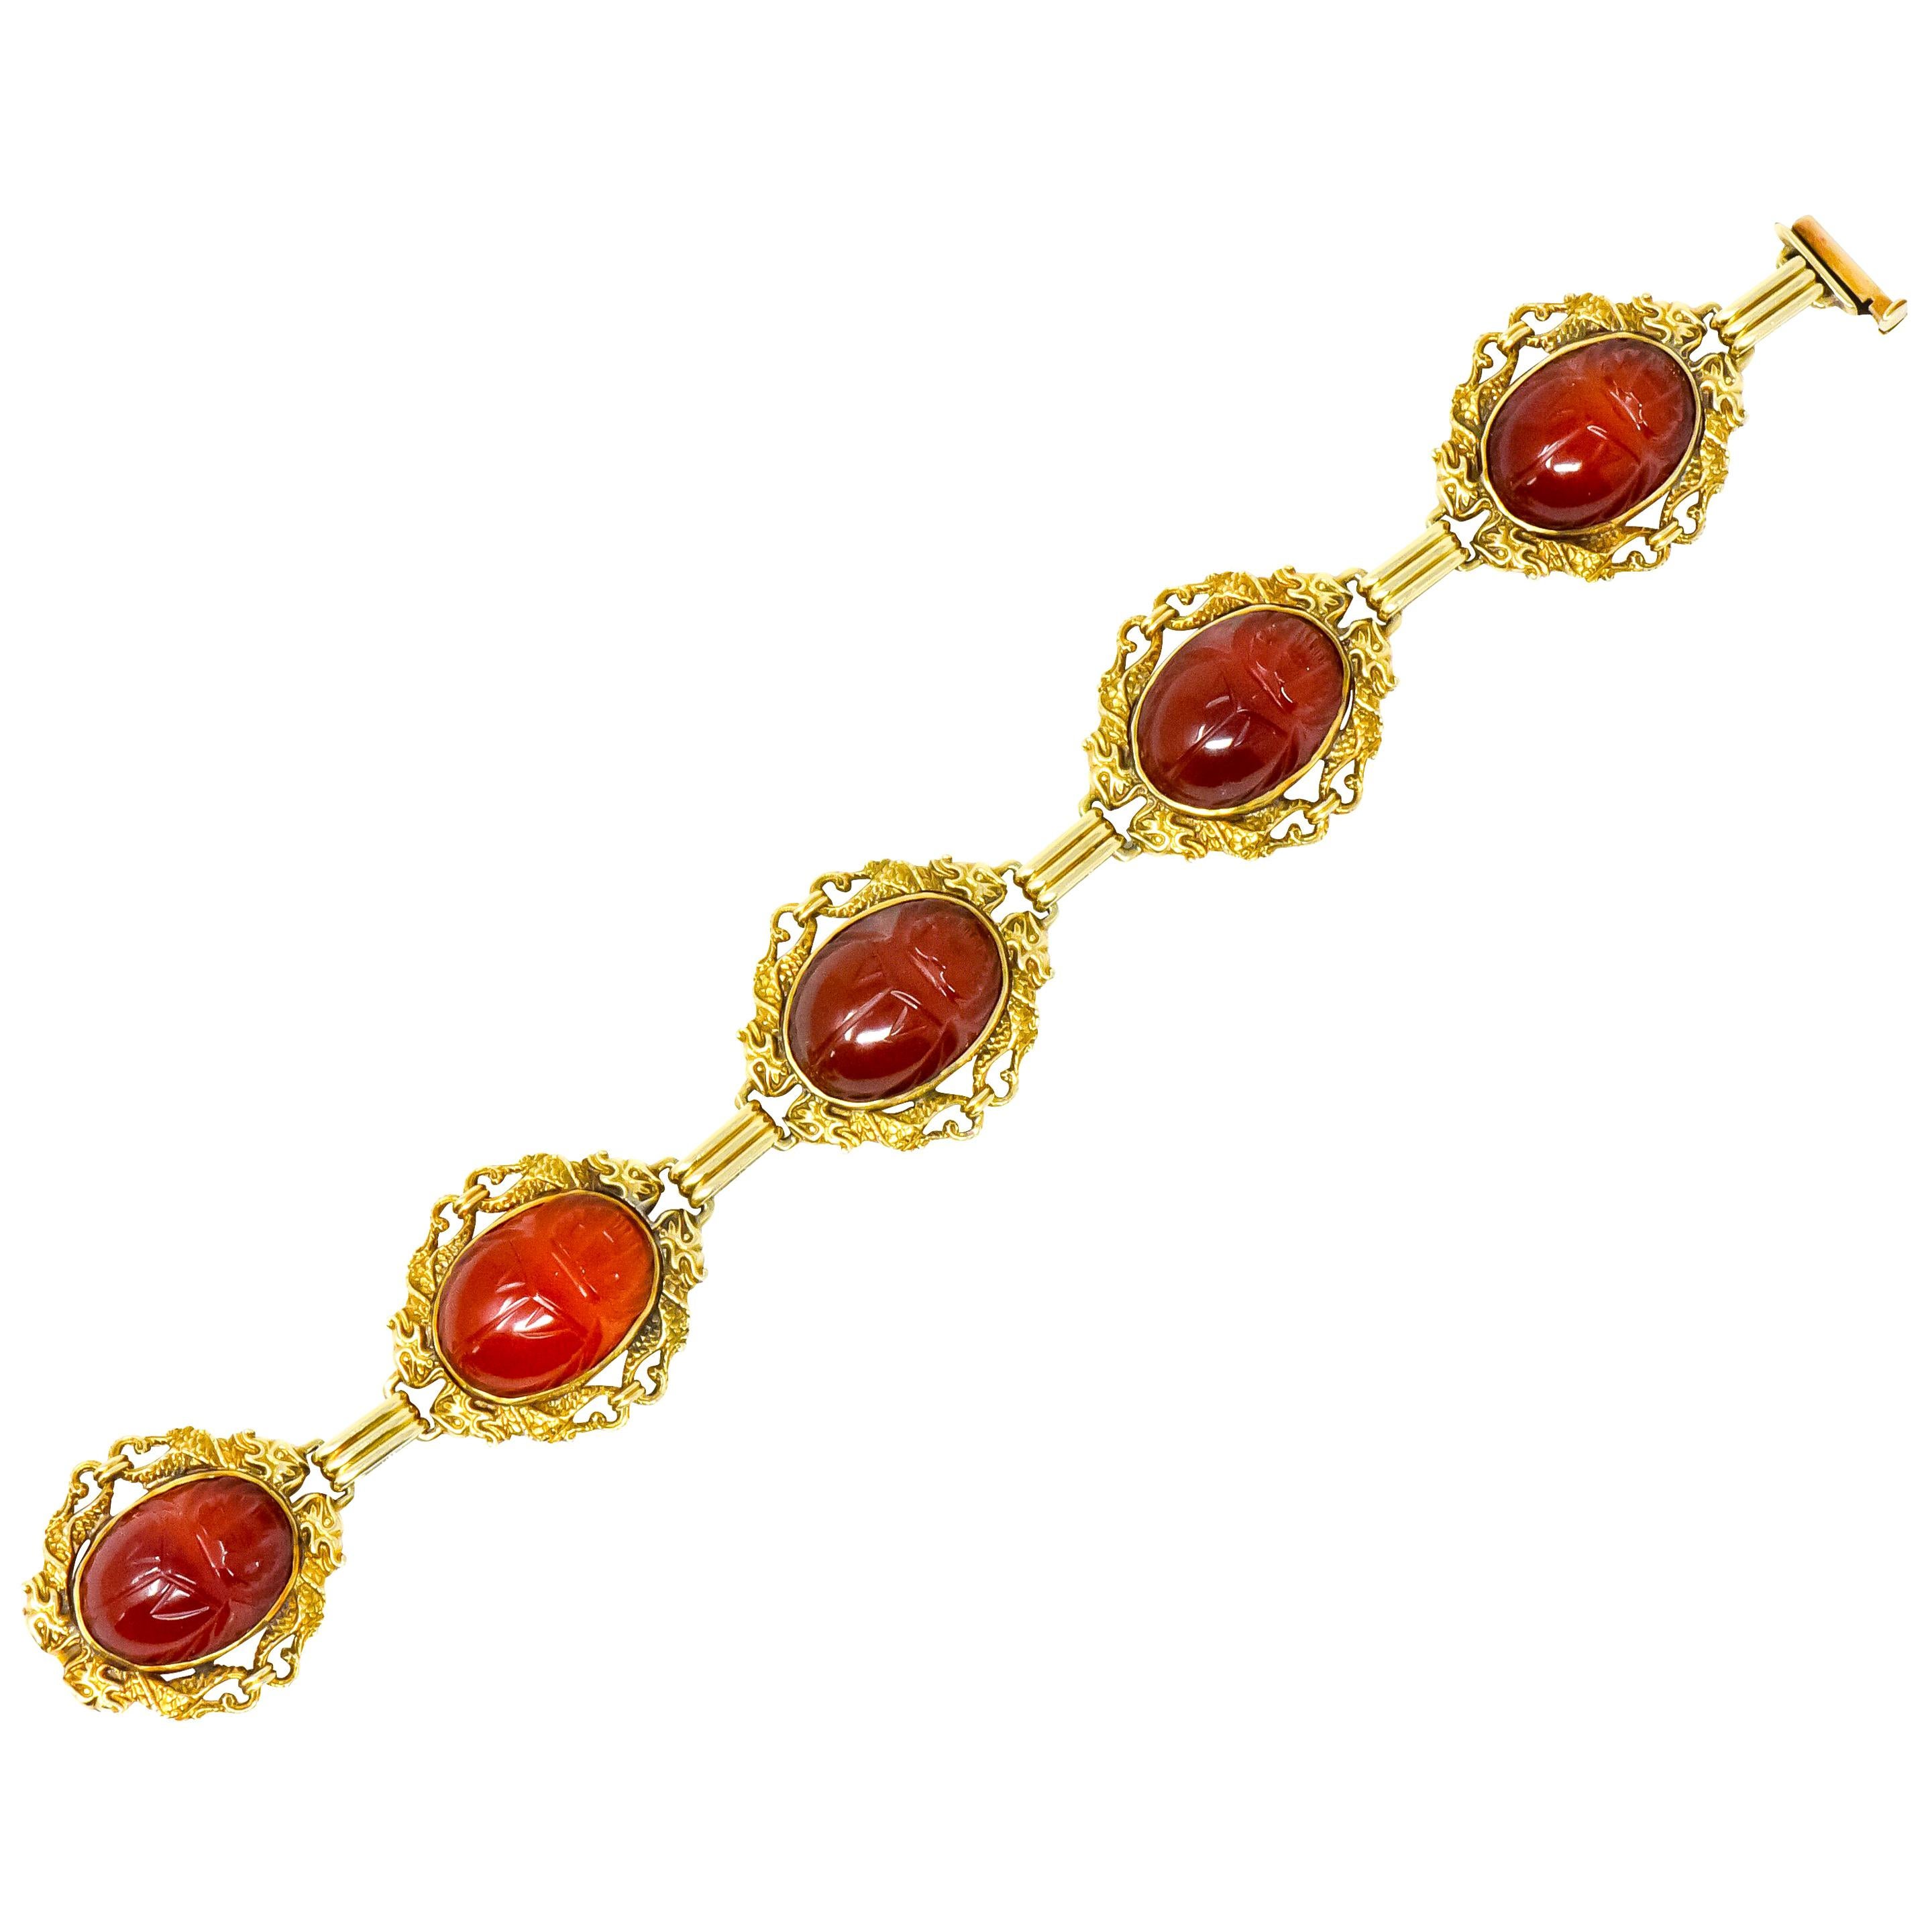 Allsopp & Allsopp Art Nouveau Carnelian Scarab 14 Karat Gold Bracelet